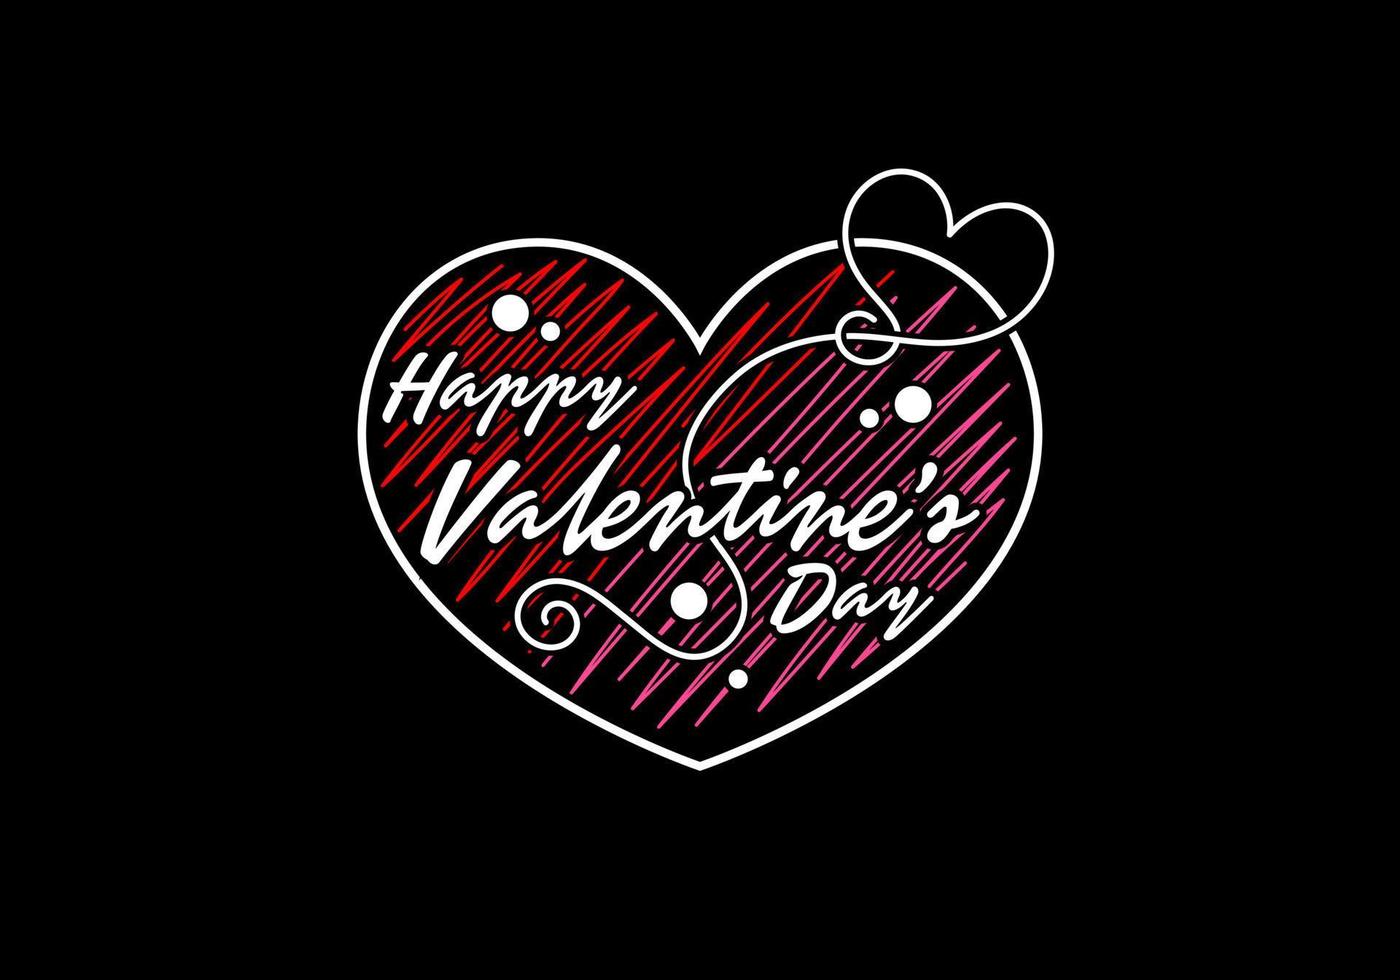 Happy Valentine's Day Text Vector